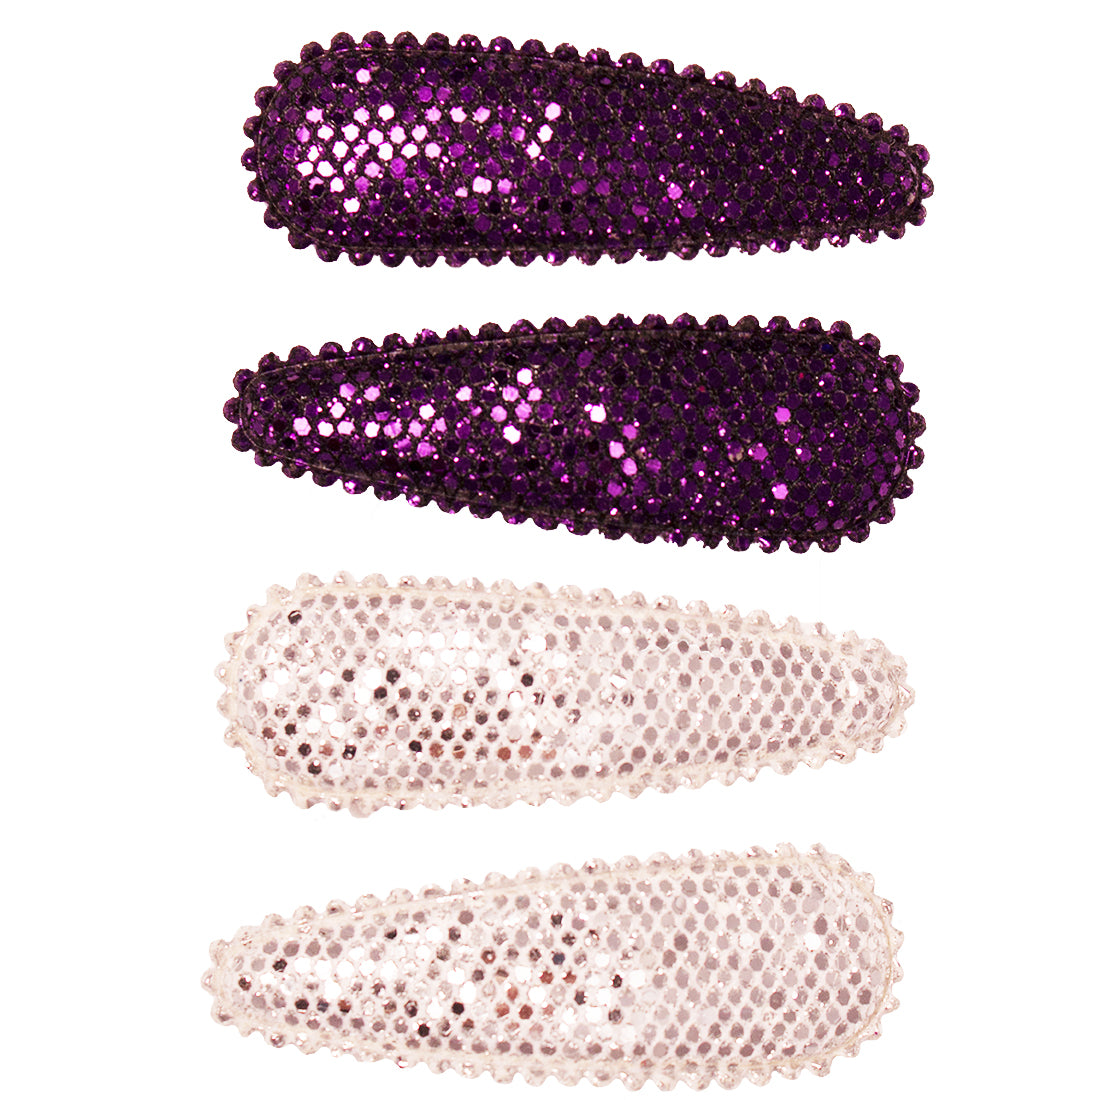 Mia® Spirit Snip Snaps® - metallic materials - 4 pieces - designed by #MiaKaminski of Mia Beauty - purple and silver colors